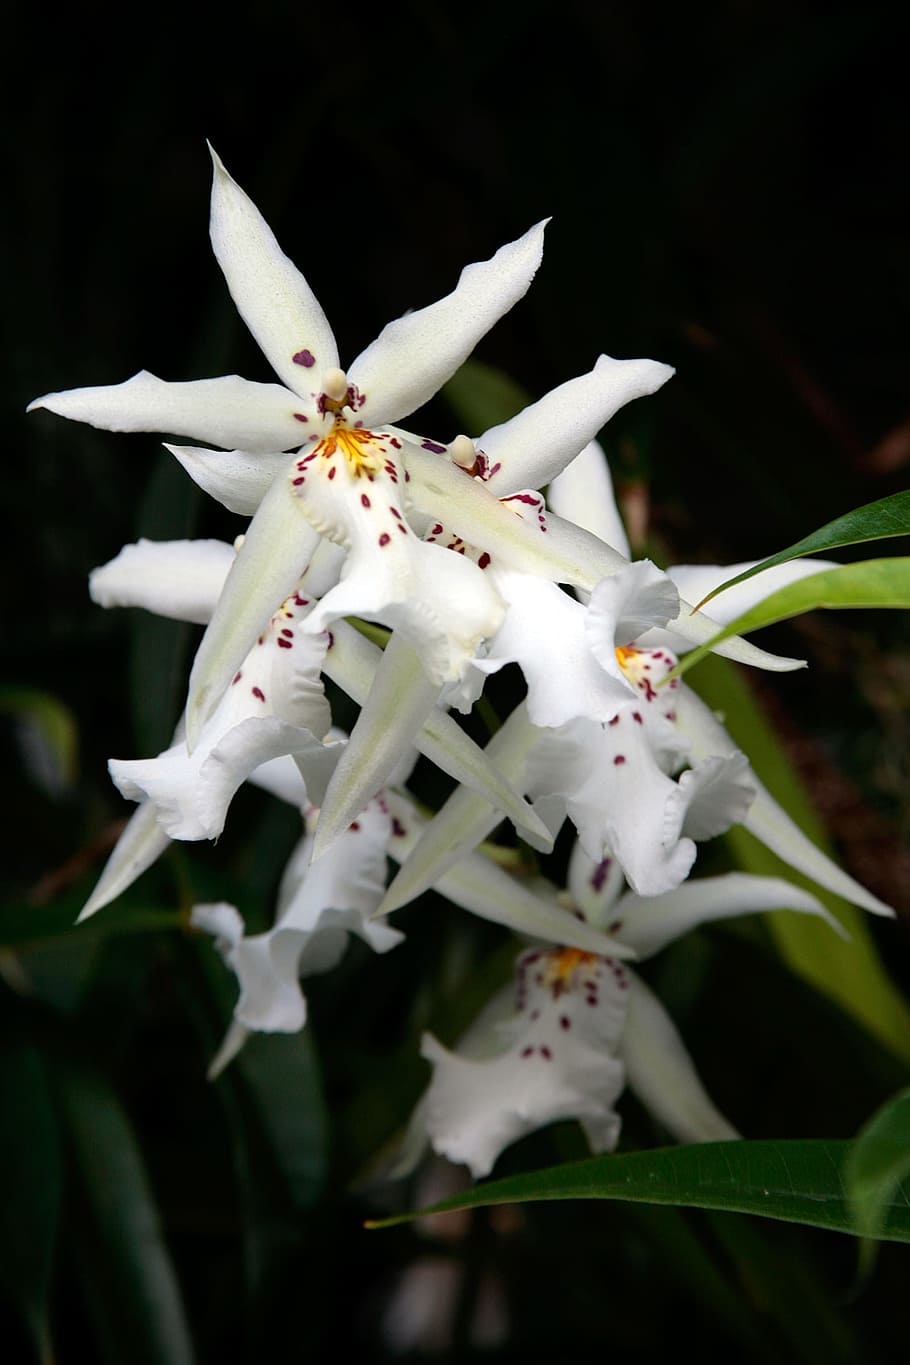 putih, bunga anggrek laba-laba, varietas, anggrek brassia, anggrek., meniru bunga anggrek laba-laba, menarik, parasit, betina, tawon laba-laba